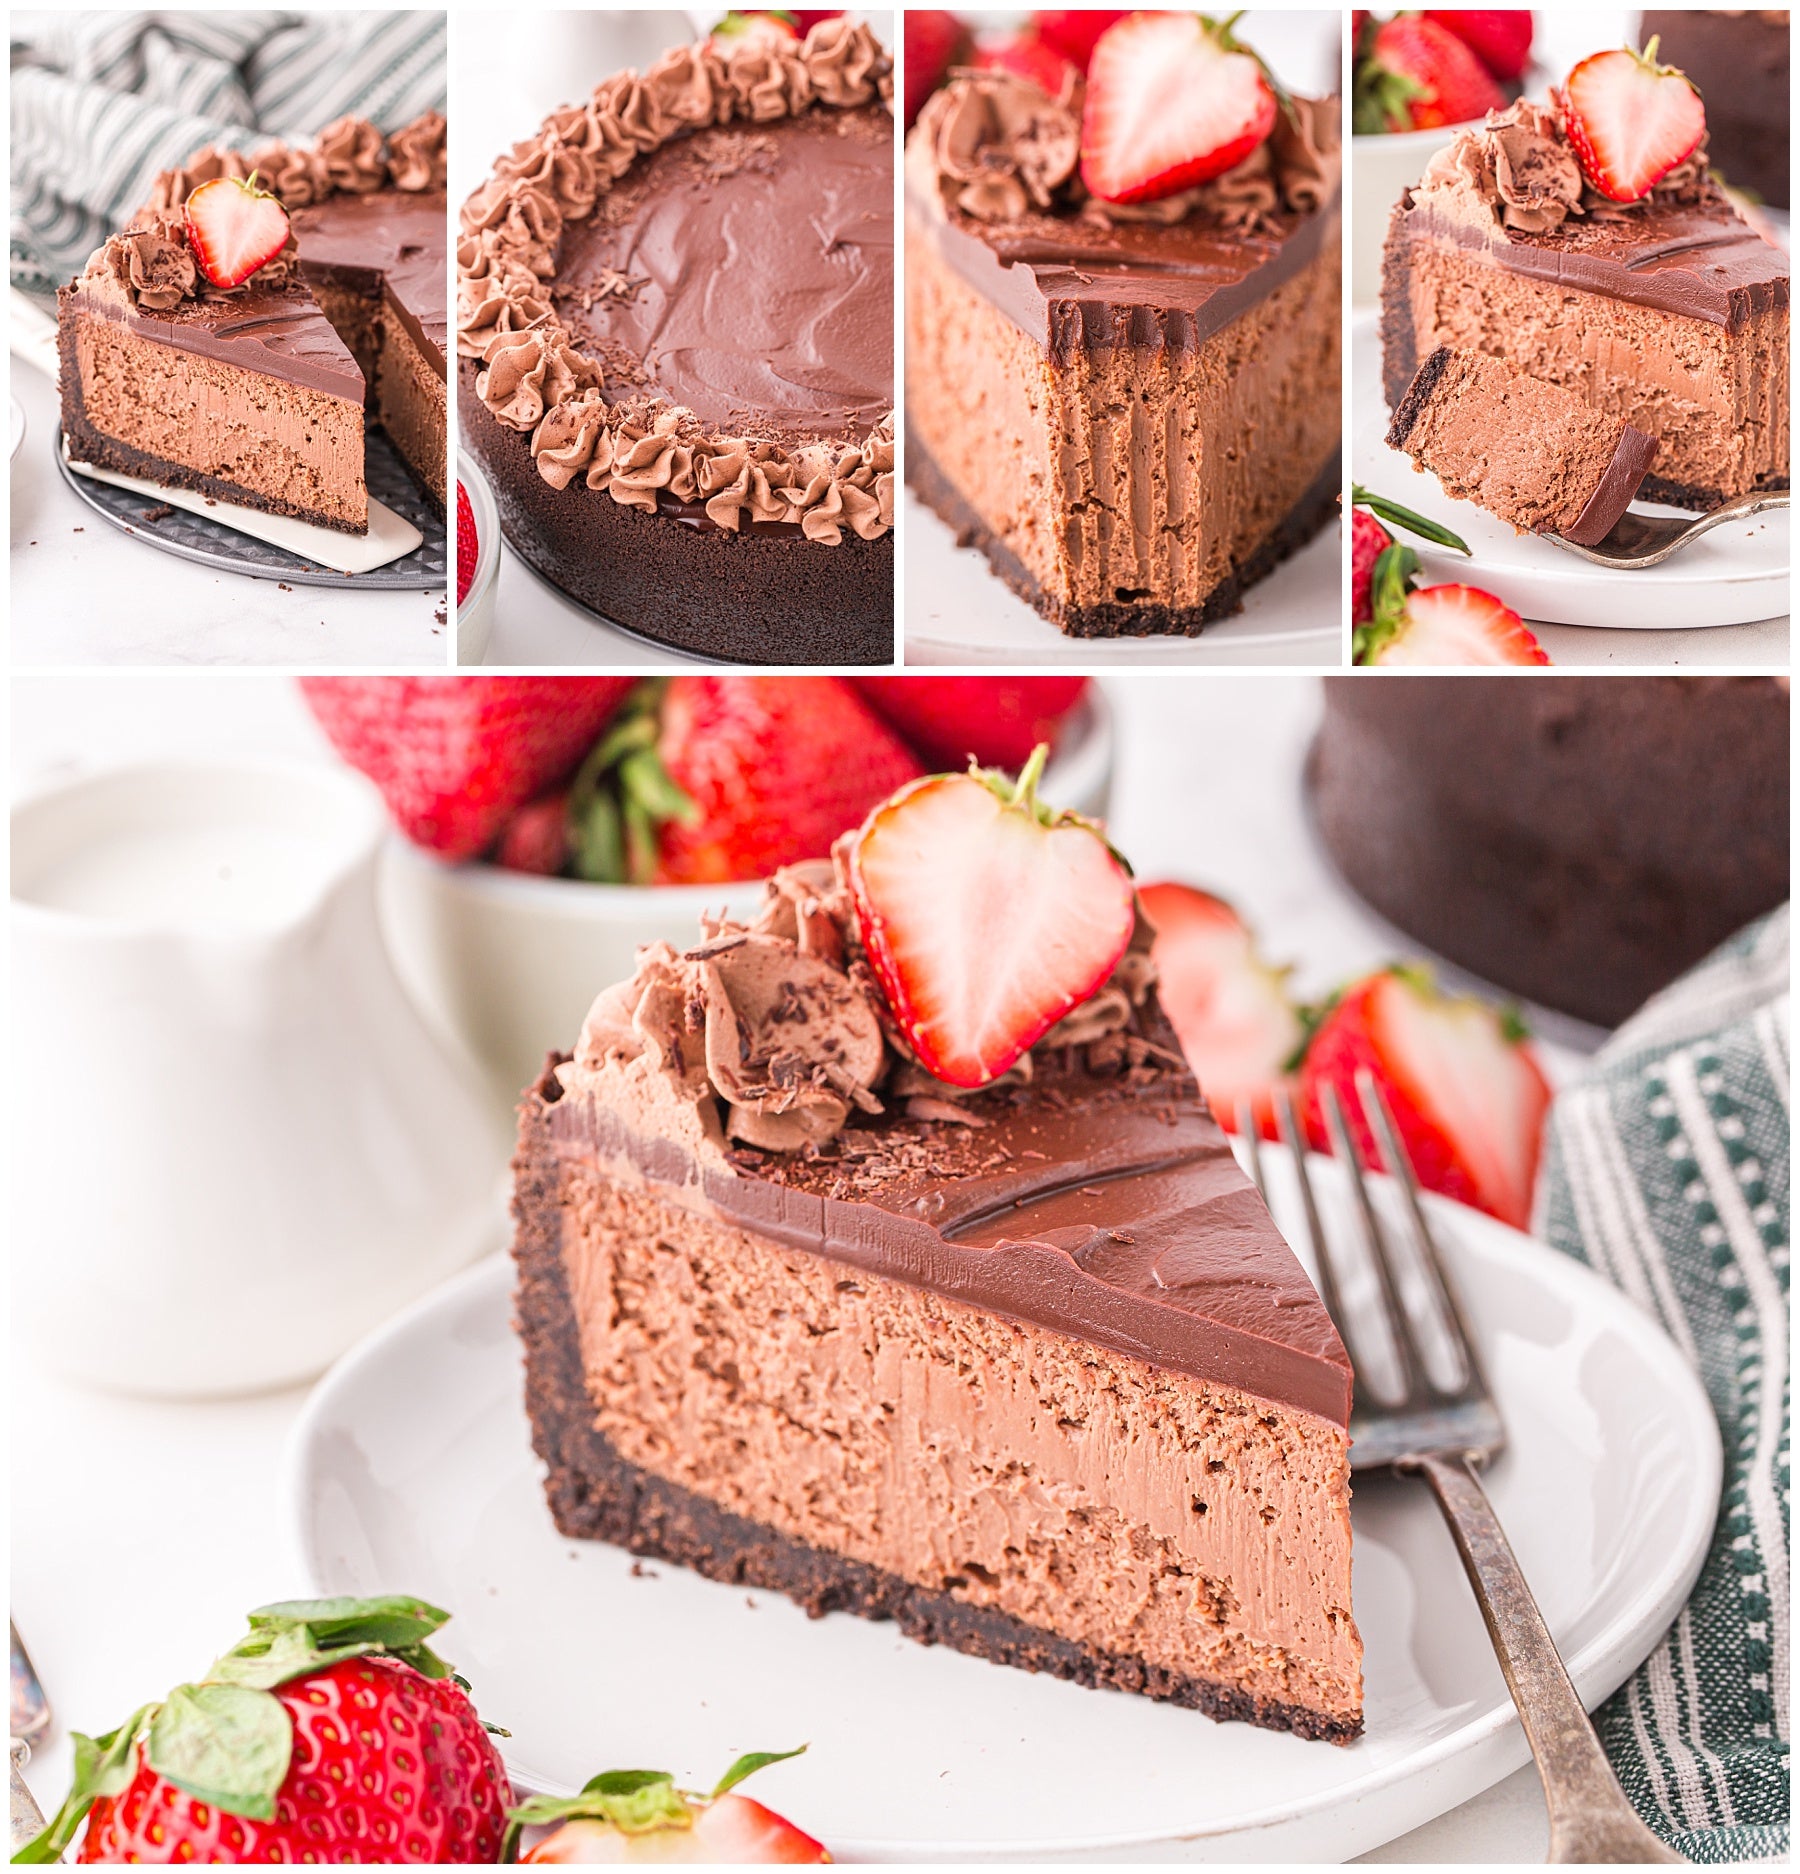 Triple Chocolate Cheesecake Semi-Exclusive - Set #1